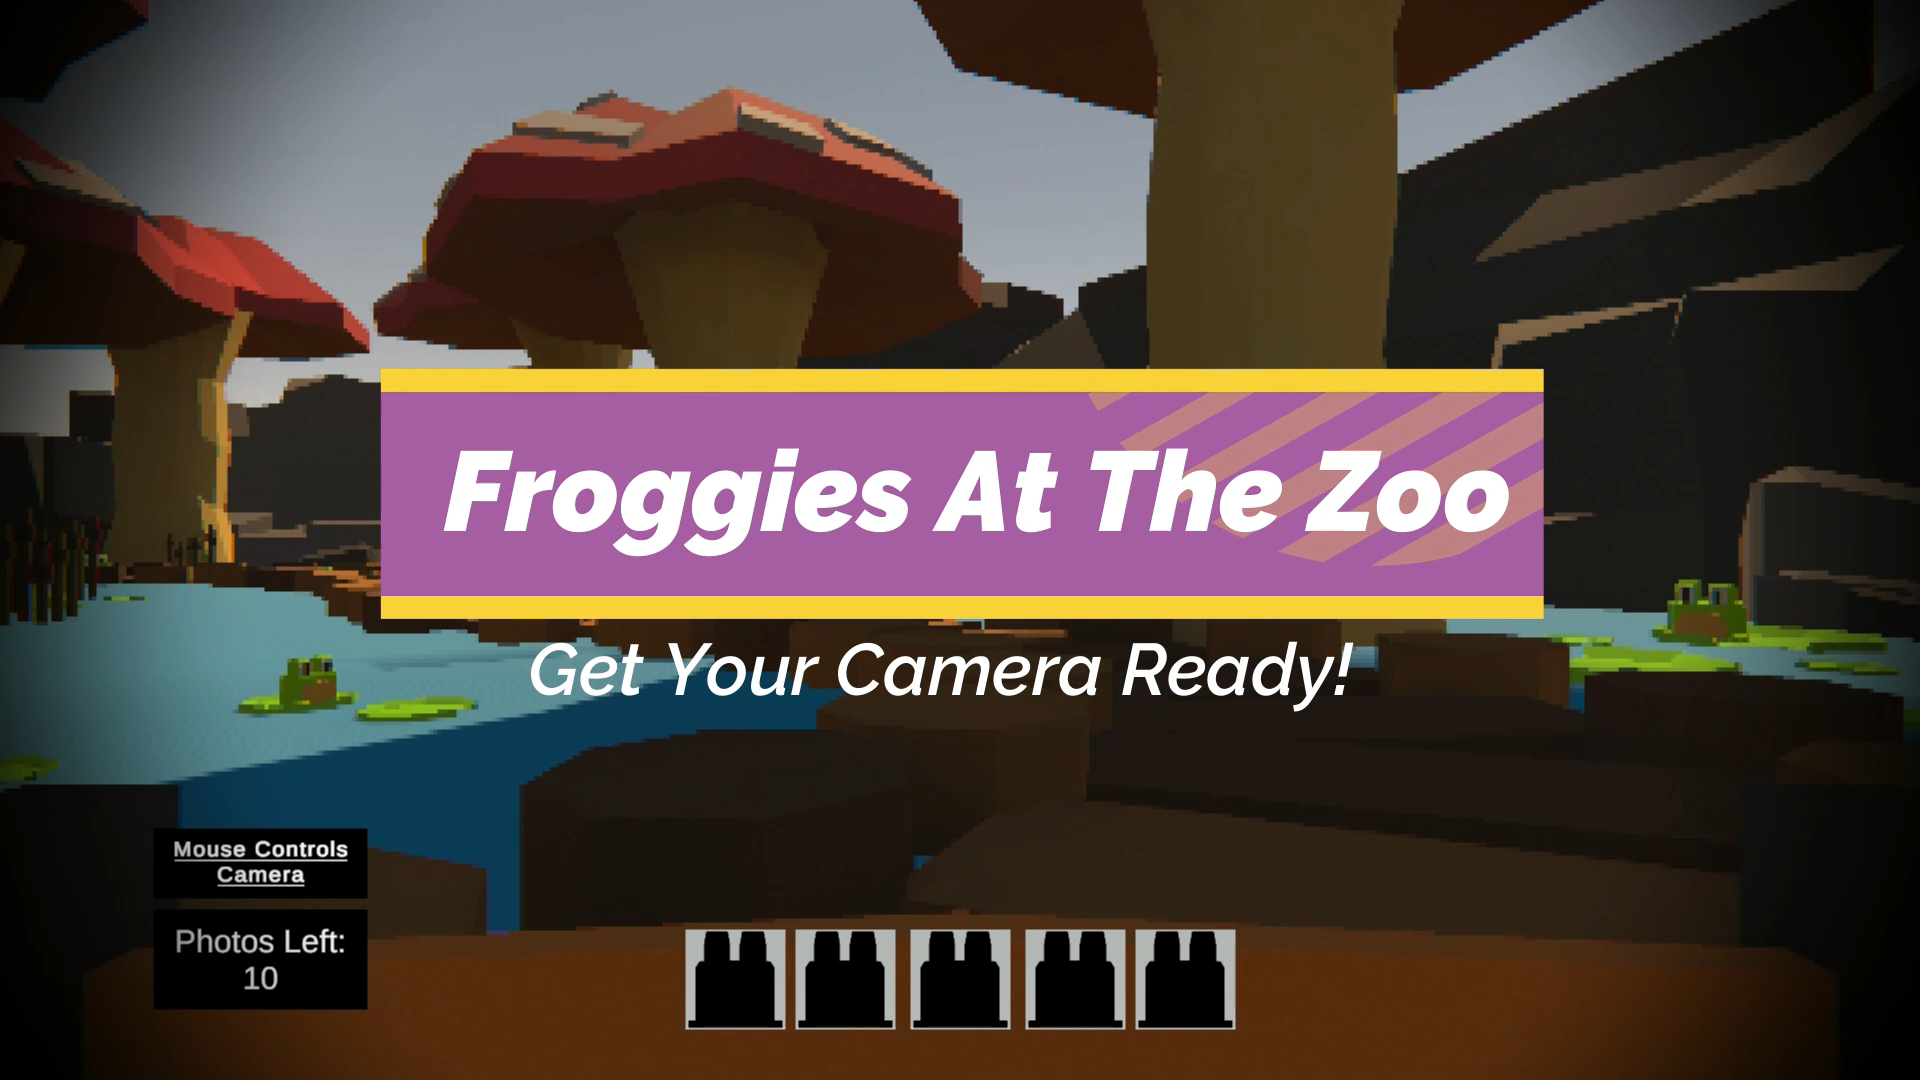 Froggies At The Zoo